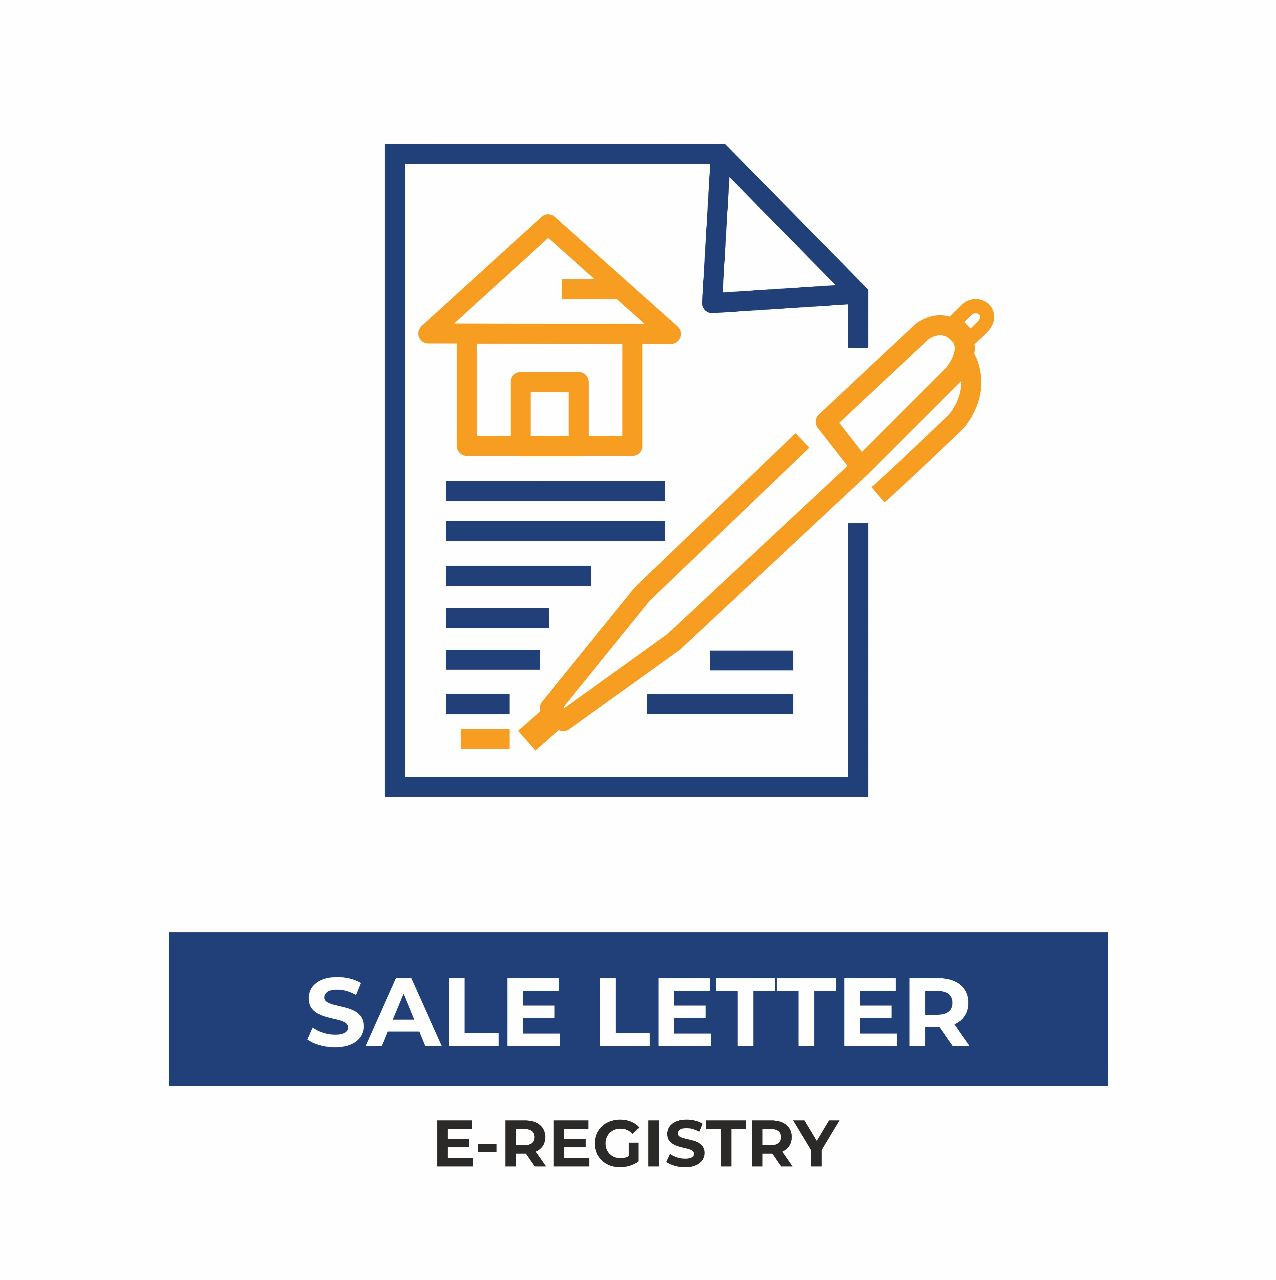 Eregistry - Sale letter